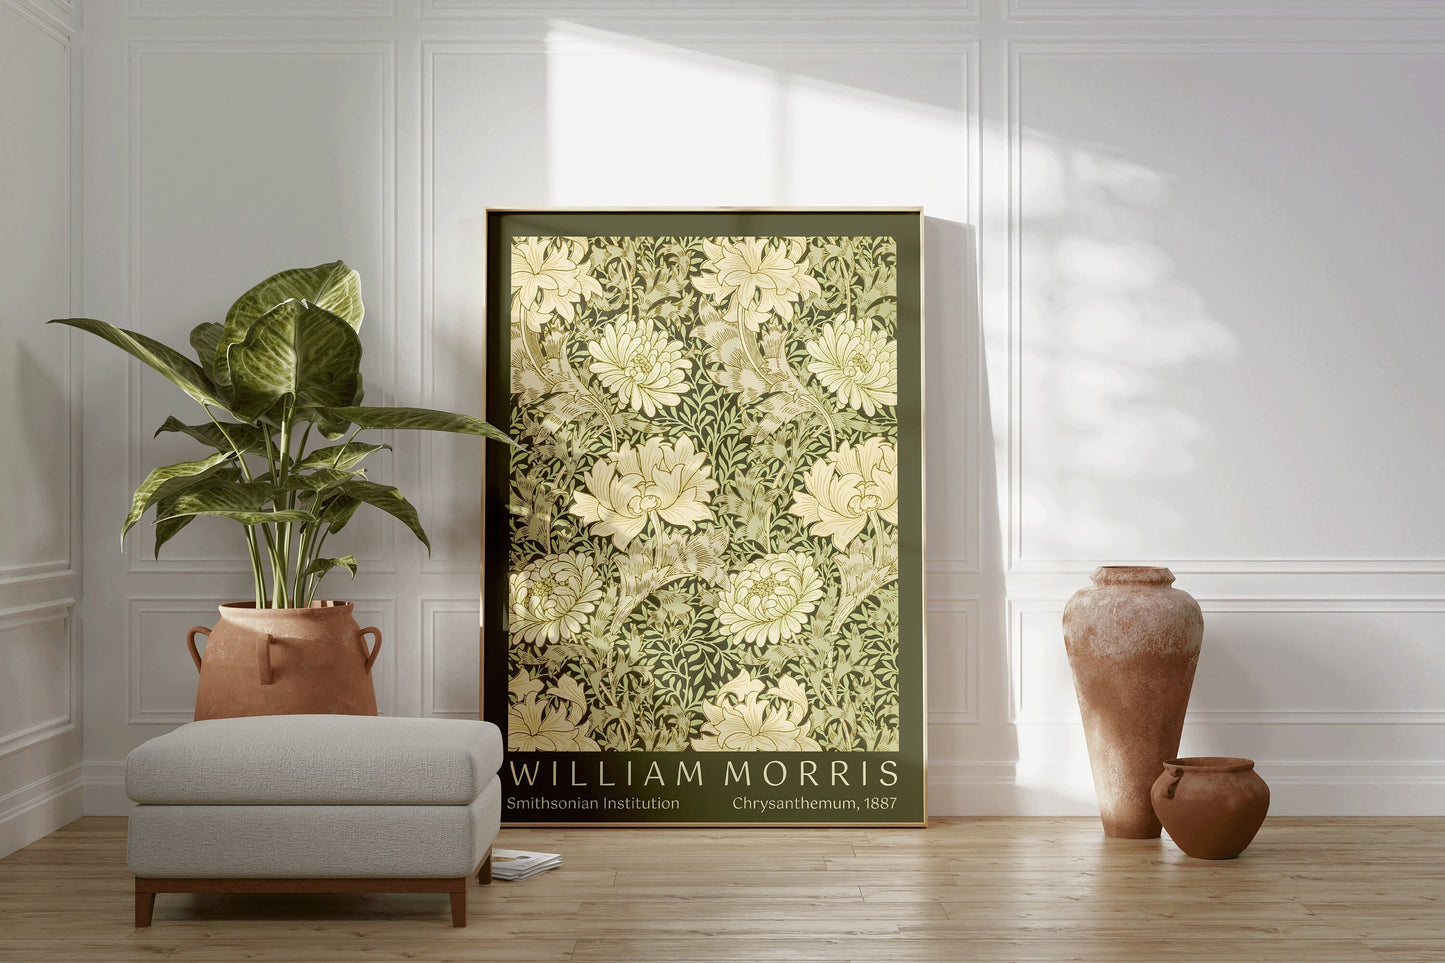 Green William Morris Poster Chrysanthemum Exhibition Poster Art Print Nouveau Morris Flower Market Ready to hang Framed Home Office Decor